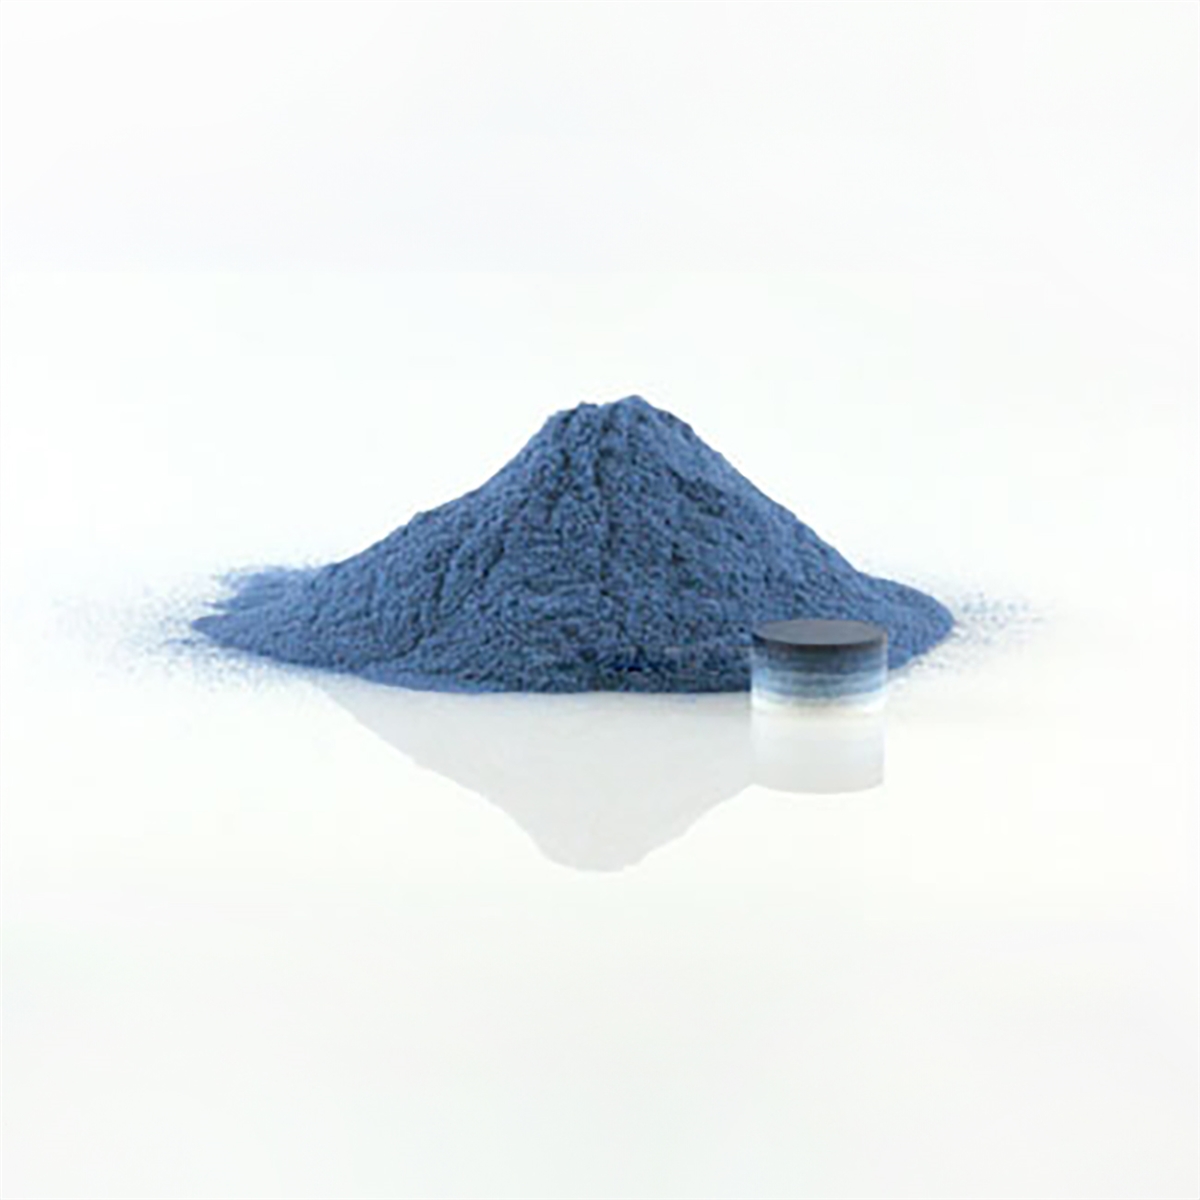 Buy FD&C Blue #1 Dye, FCC Grade Powder $65+ Bulk Sizes